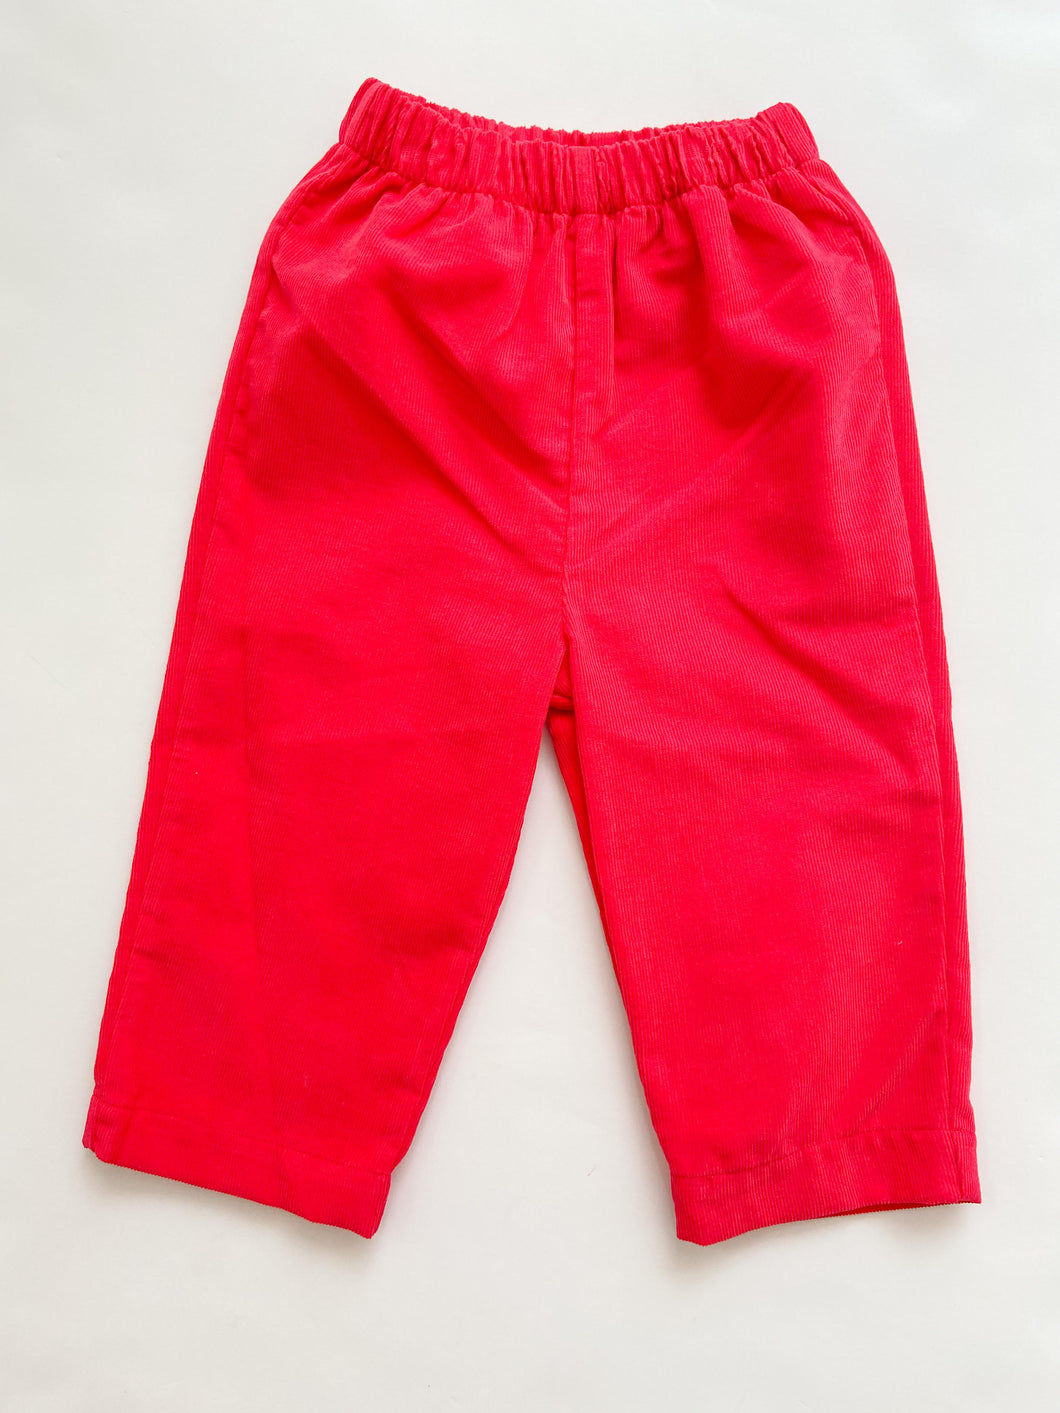 Boys Cord Pant Red 325PB - Toddler Boys